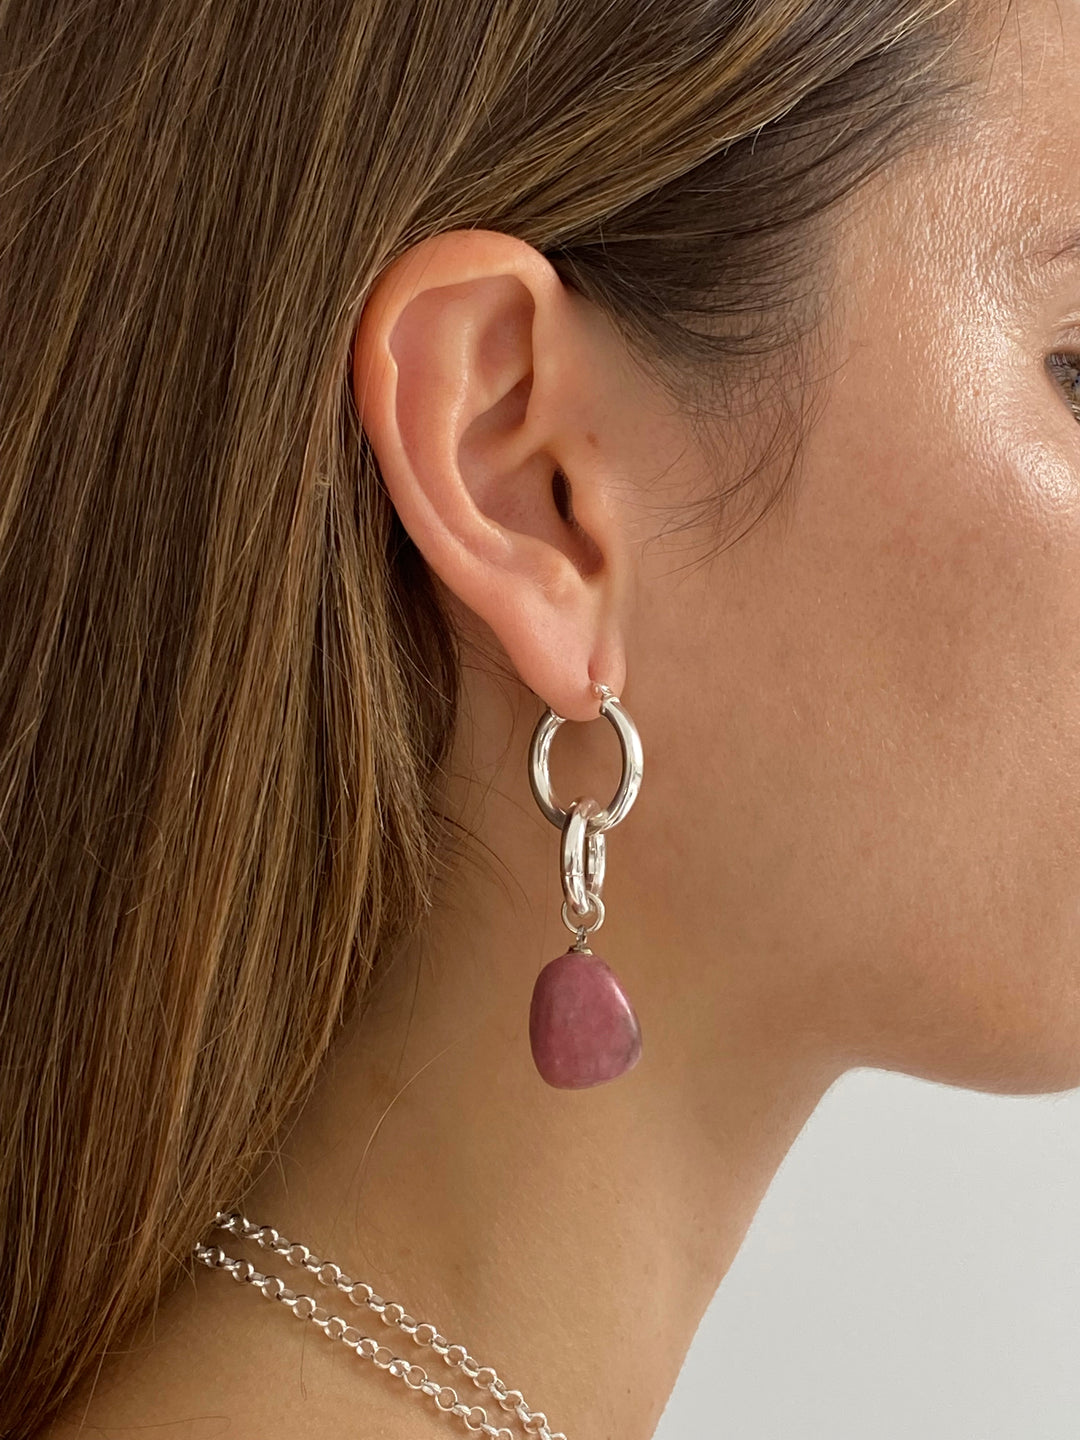 llayers minimal Silver Rhodonite hoops earrings jewelry Made in Brooklyn New York